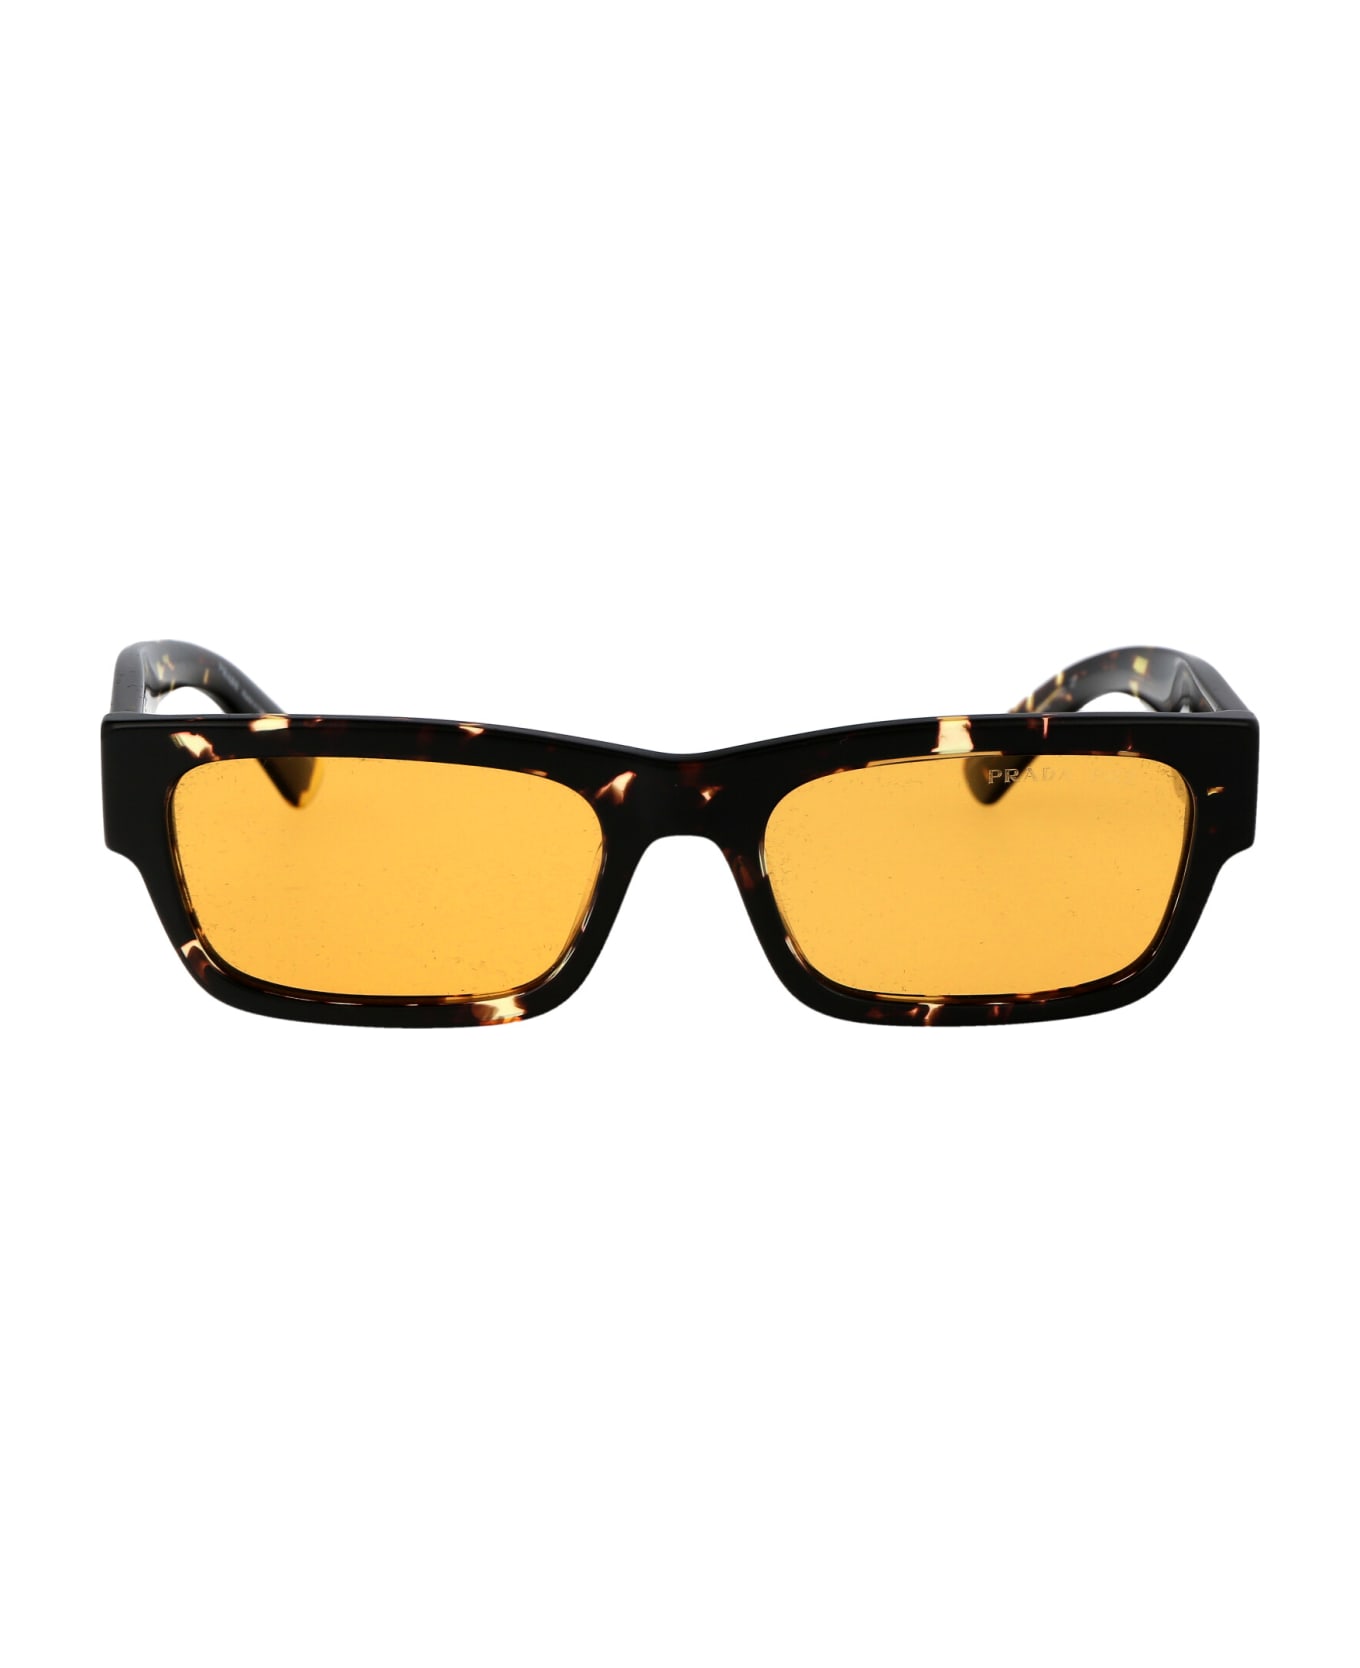 Prada Eyewear 0pr A03s Sunglasses - 16O20C Havana Black/Yellow